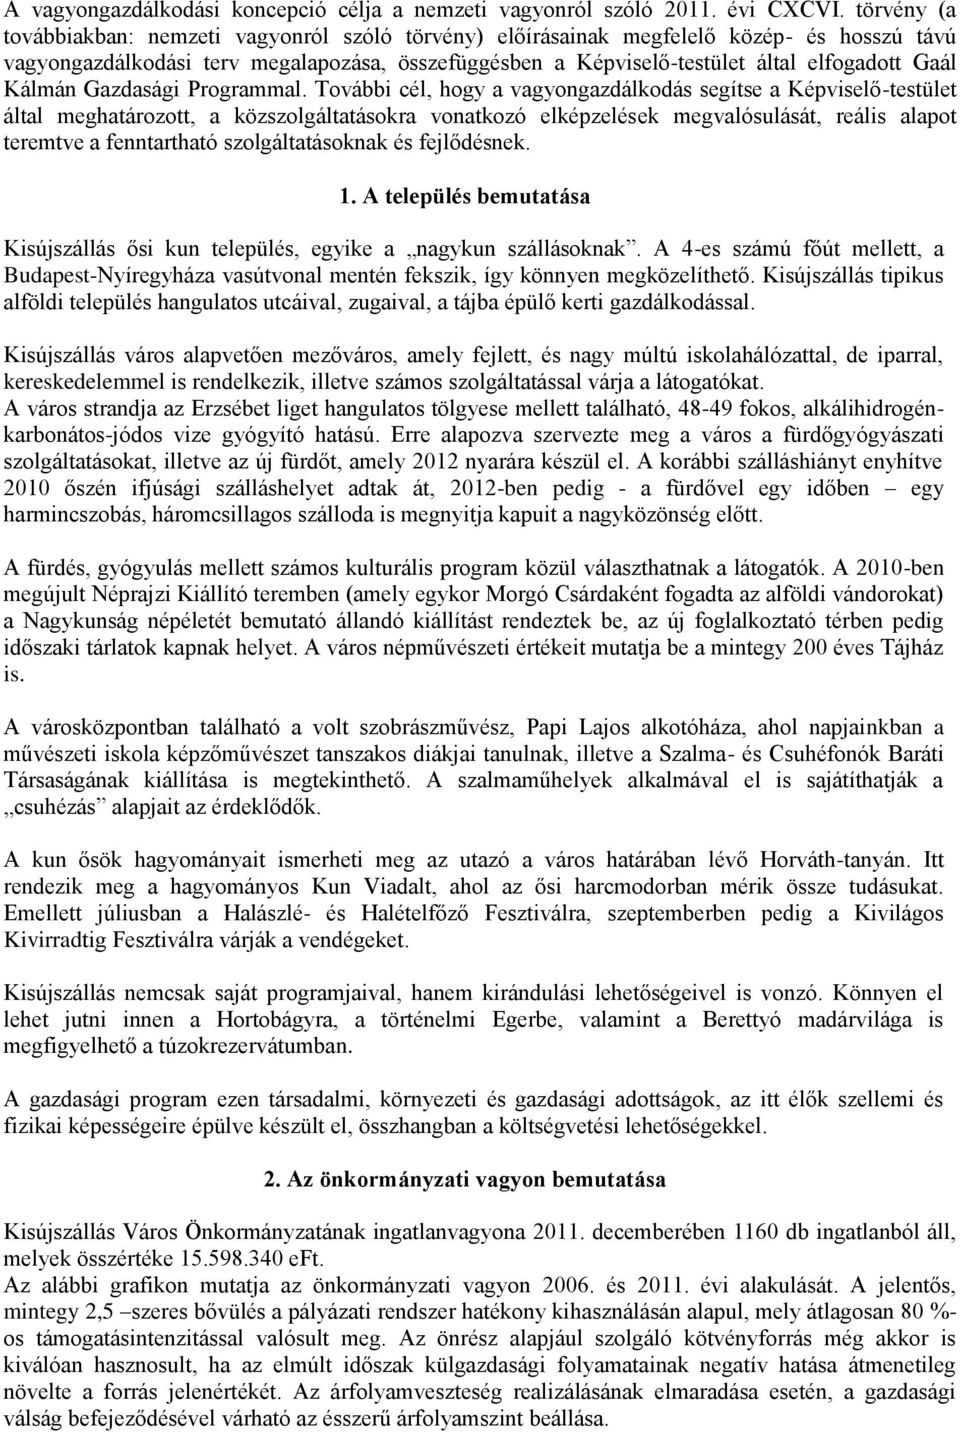 Kálmán Gazdasági Programmal.